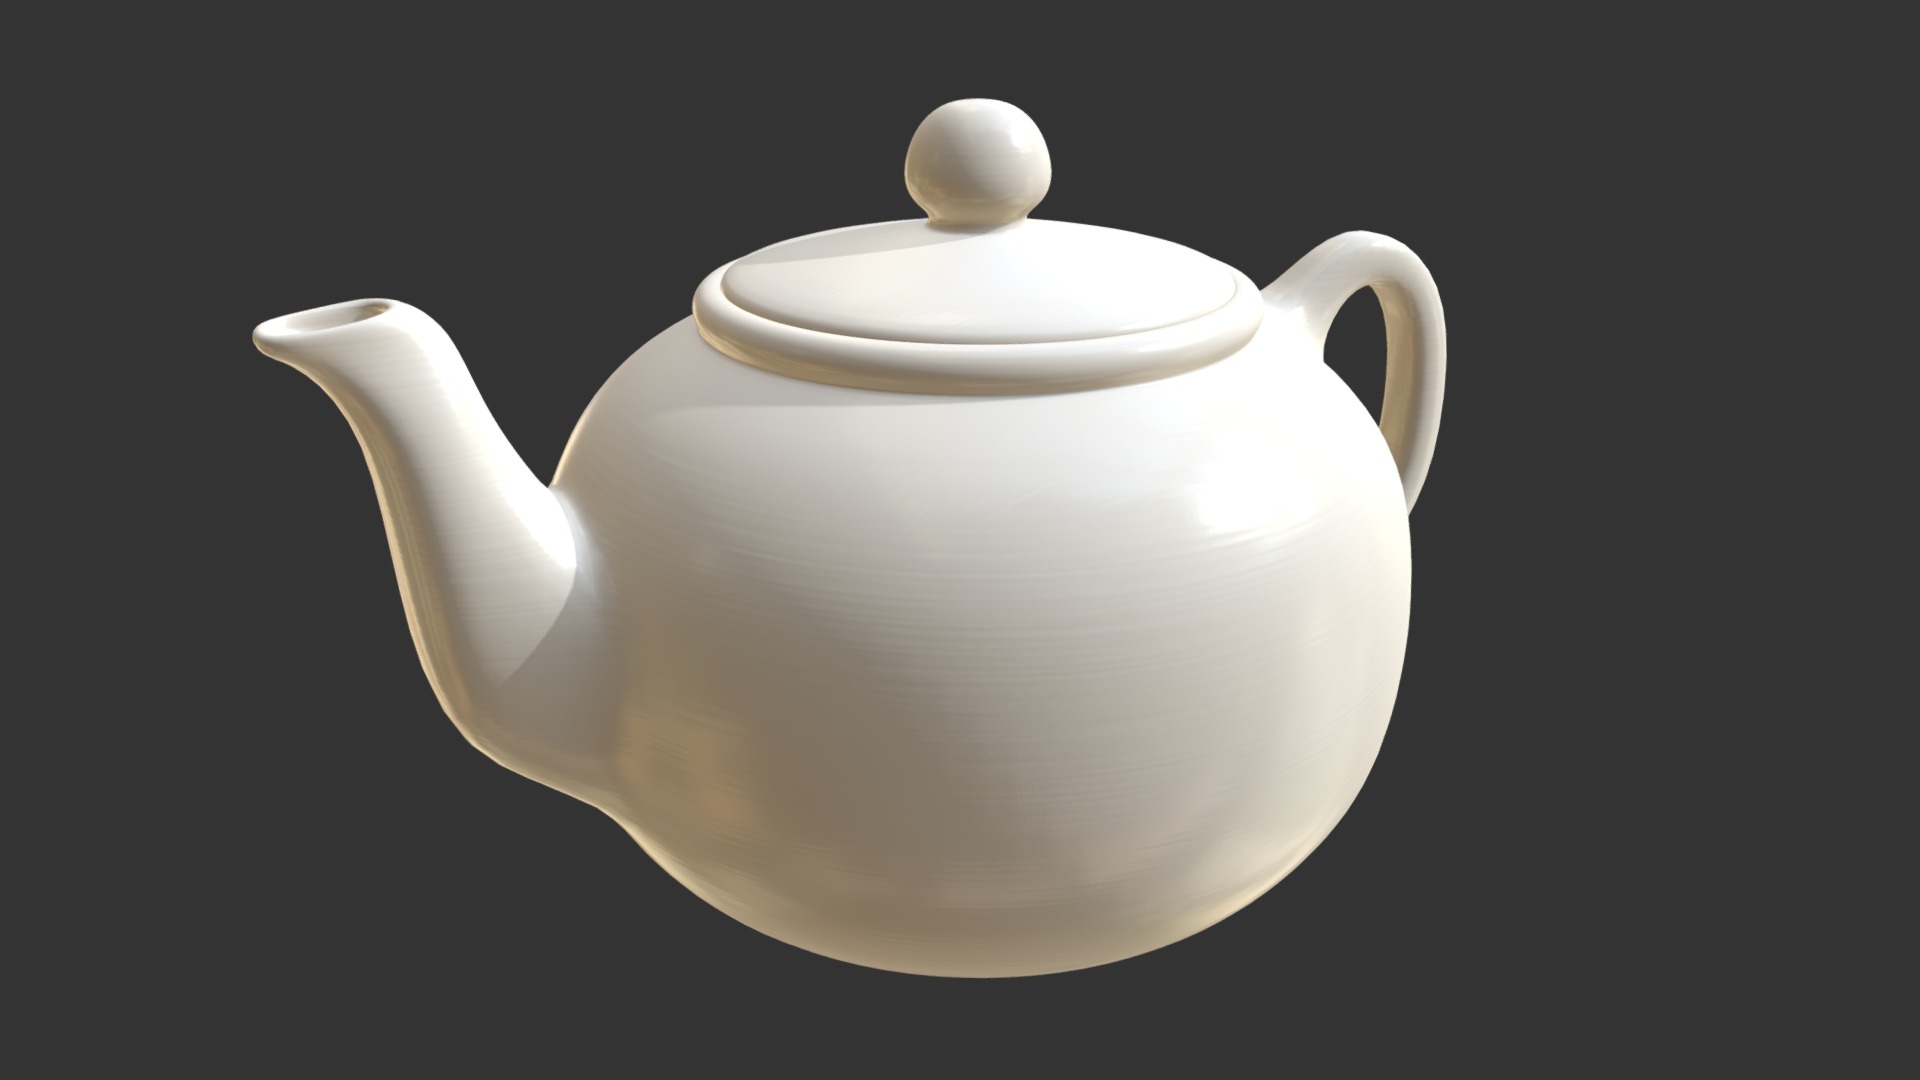 3D model Porcelain teapot 1 - This is a 3D model of the Porcelain teapot 1. The 3D model is about a white teapot with a handle.